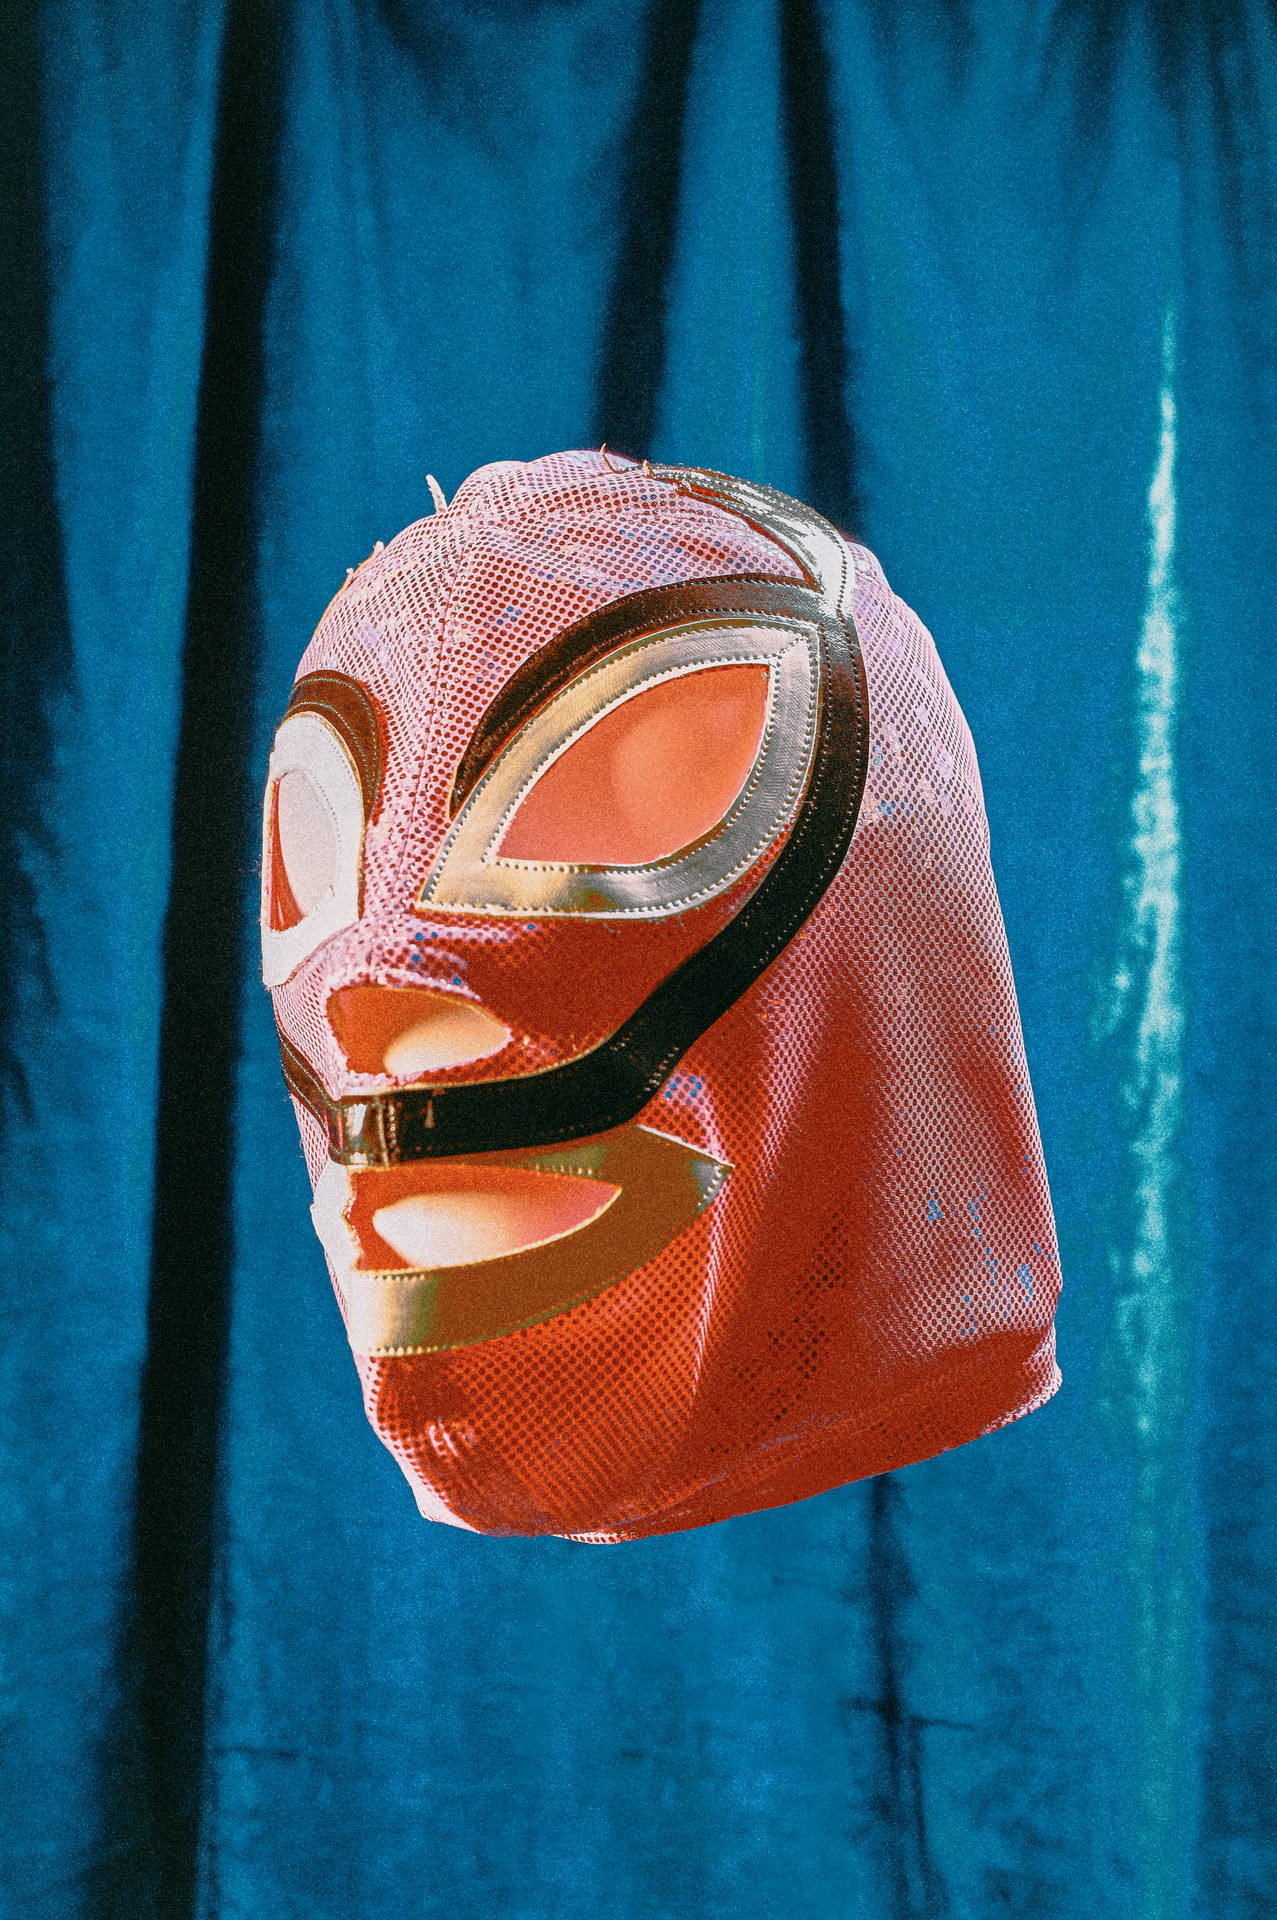 "Mask Ready; Wrestler Ready!" Wallpaper